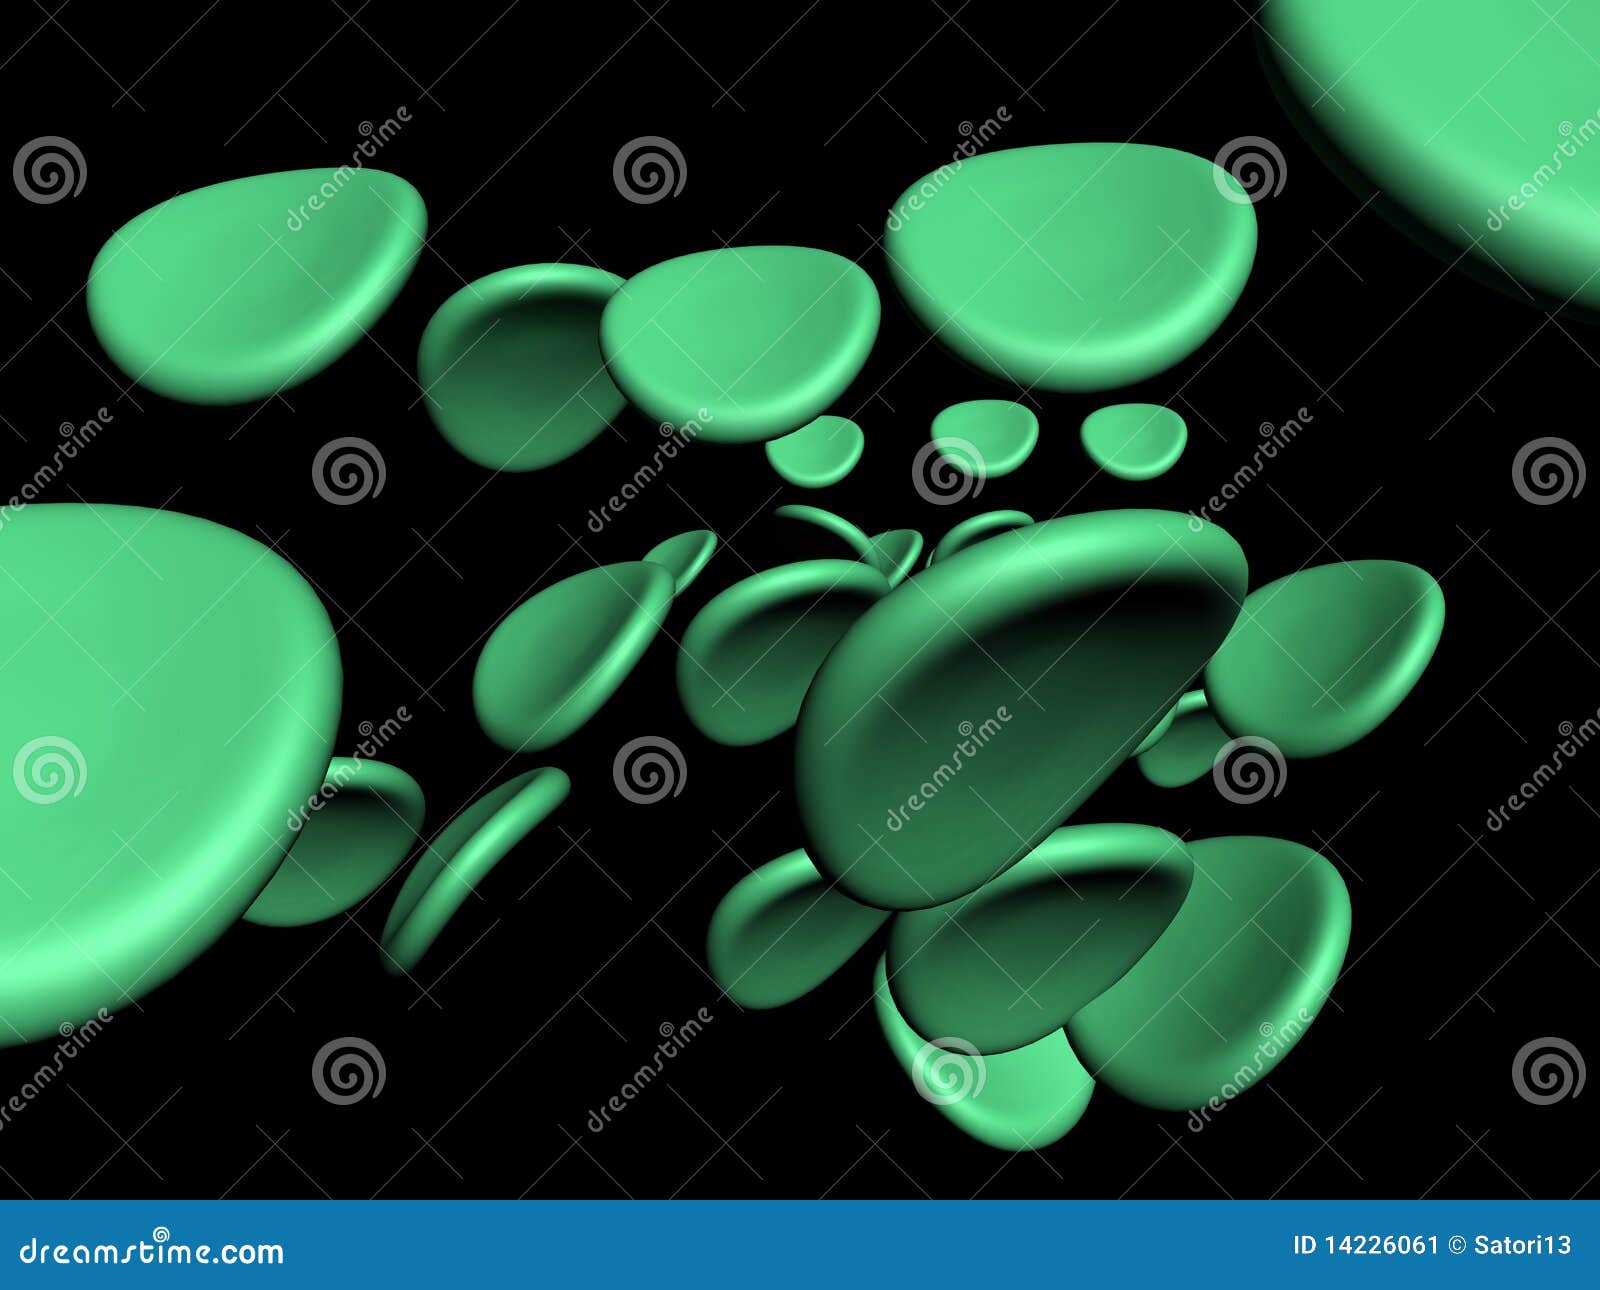 chlorophyll cells